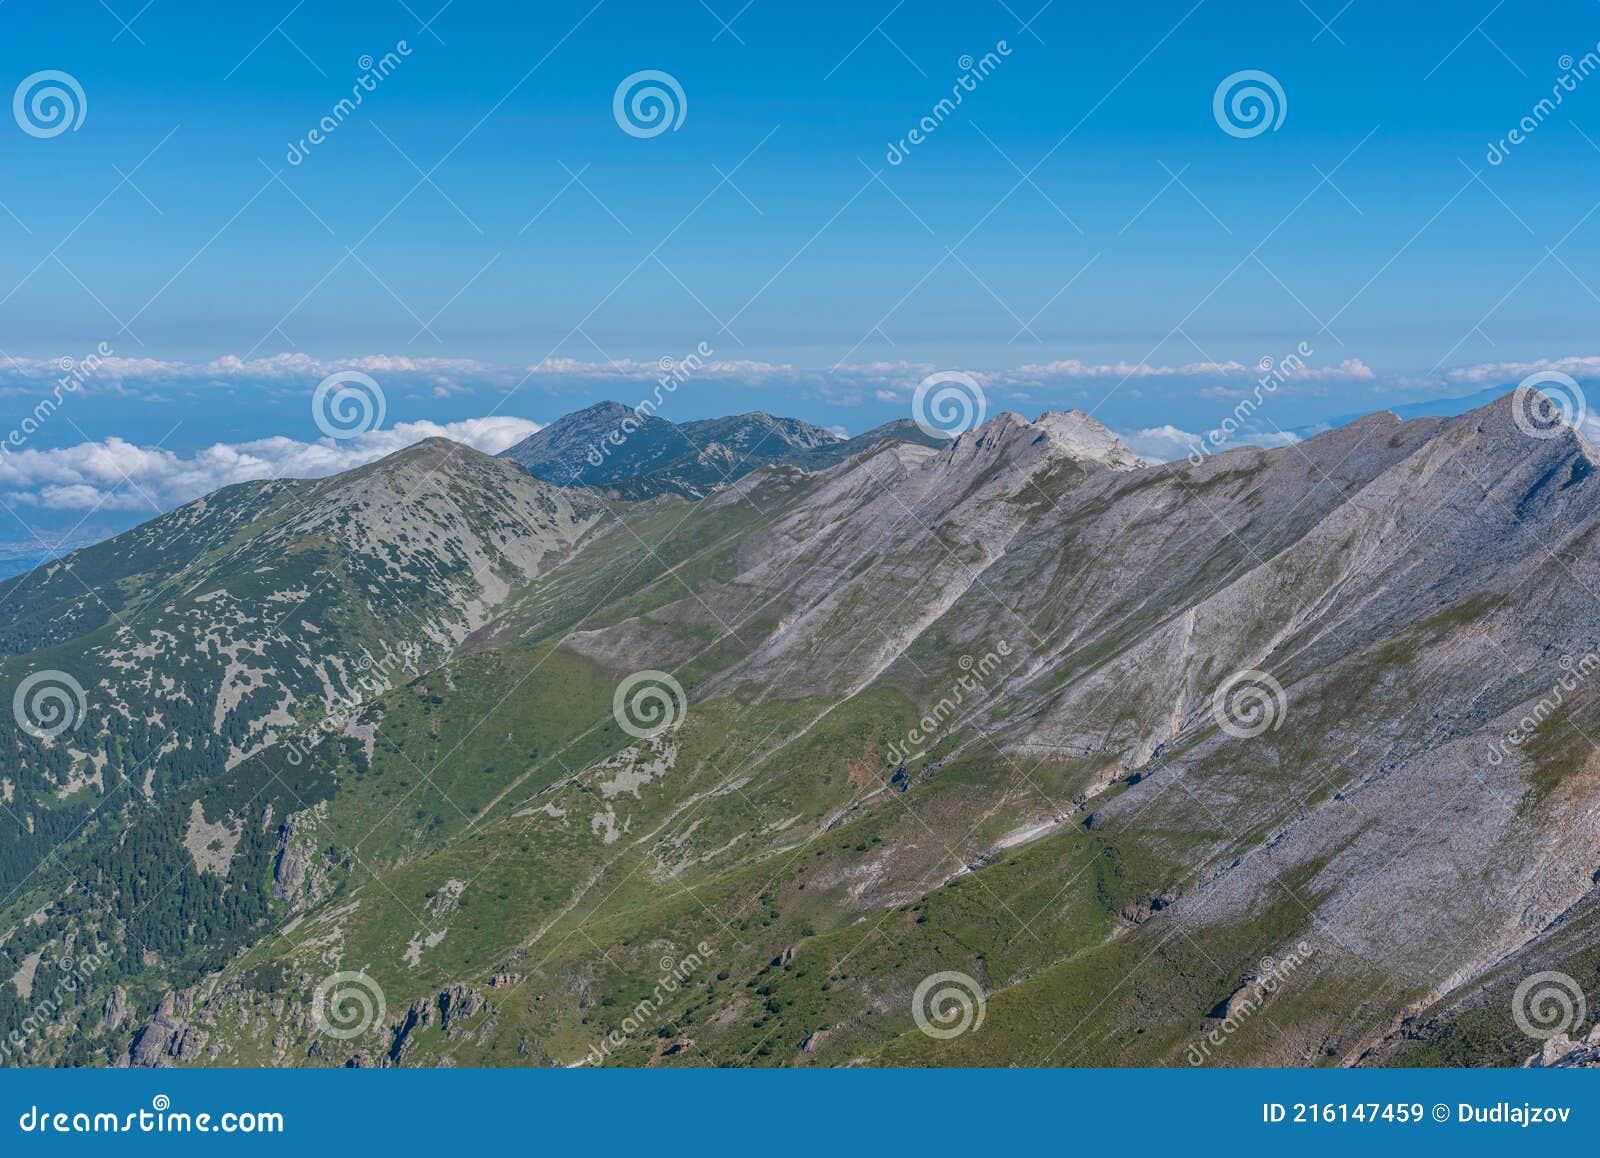 Panorama of Pirin National Park in Bulgaria Stock Image - Image of ...